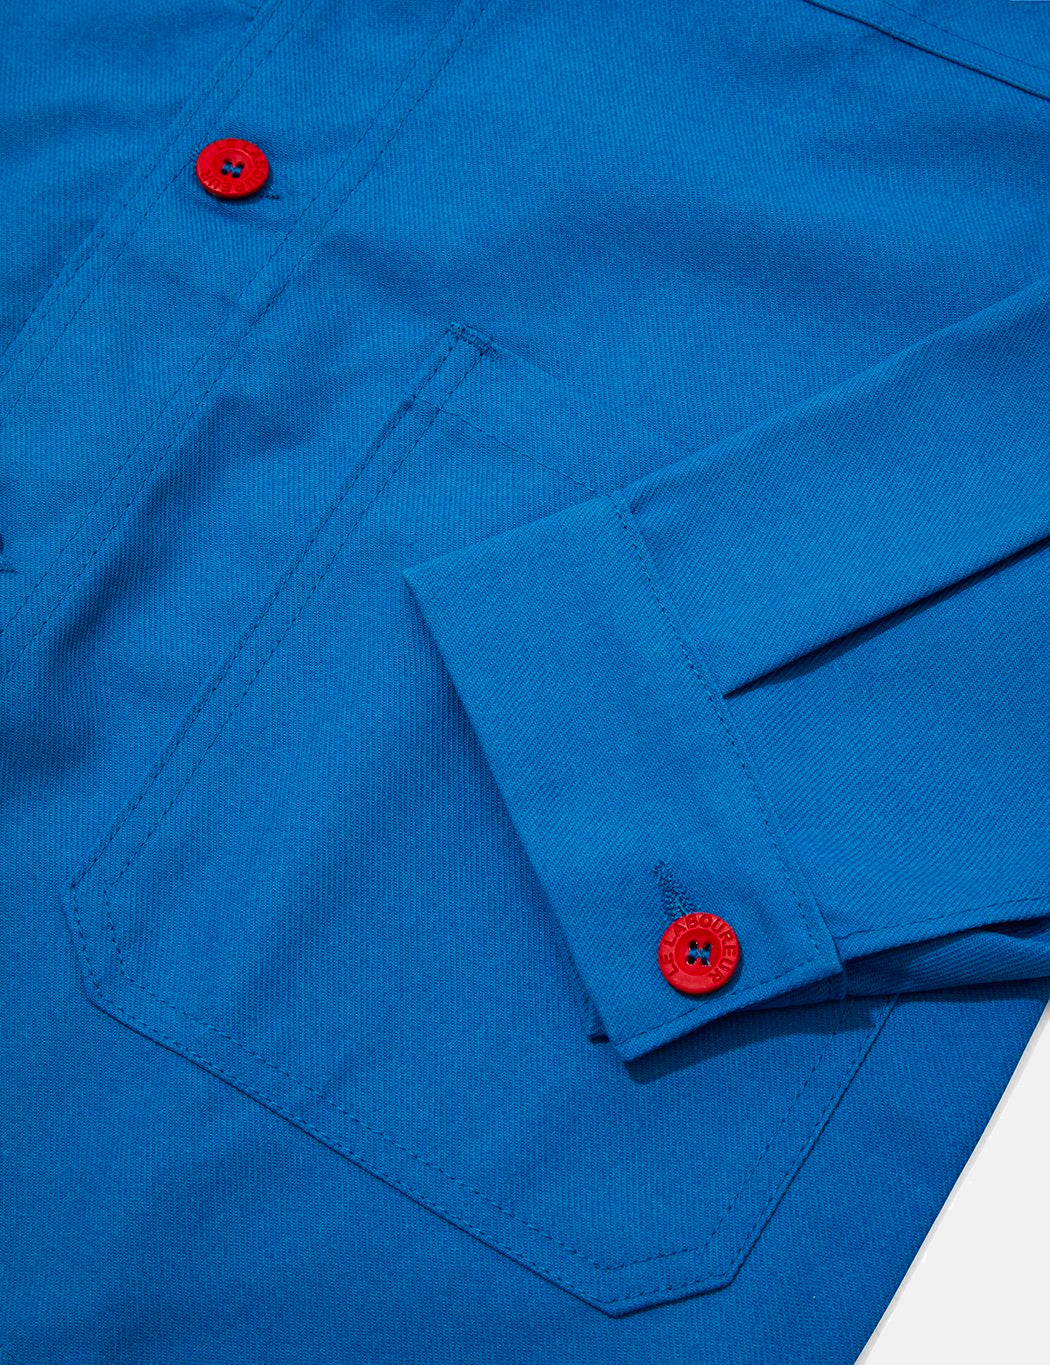 Le Laboureur Work Jacket (Cotton Drill) - Bugatti Blue/Red Buttons ...